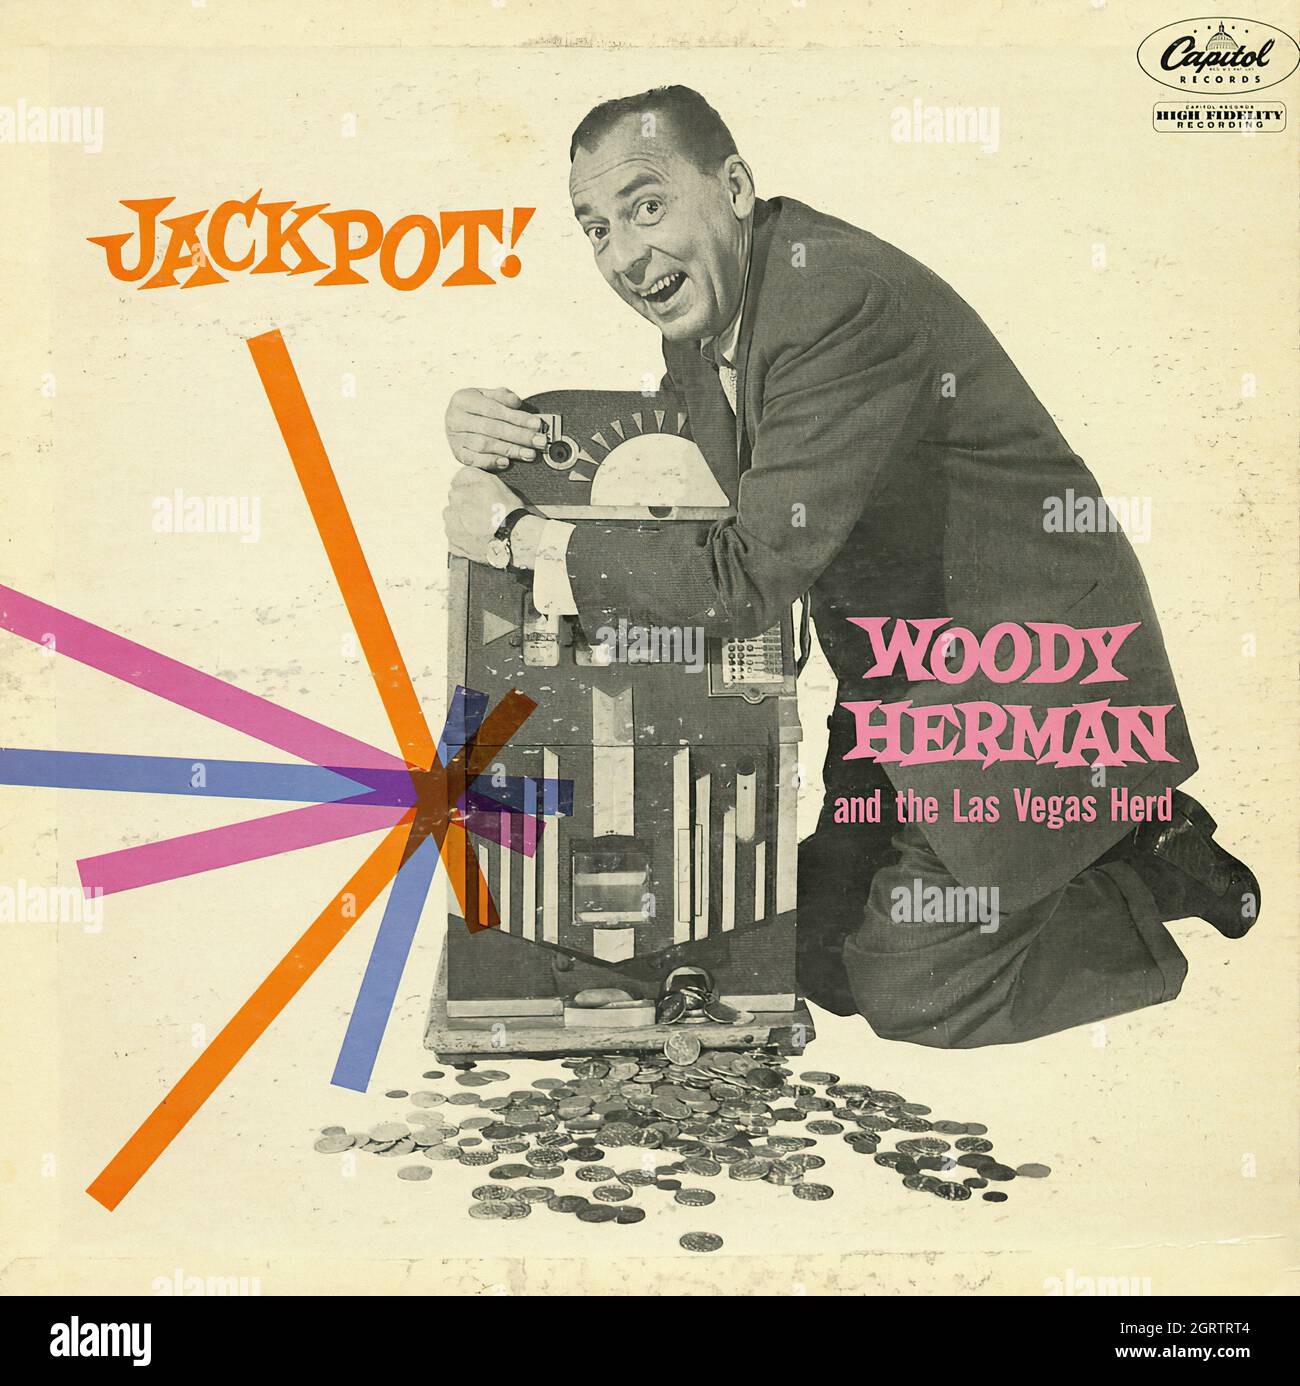 Woody Herman - Jackpot! -  Vintage American Comedy Vinyl Album Stock Photo